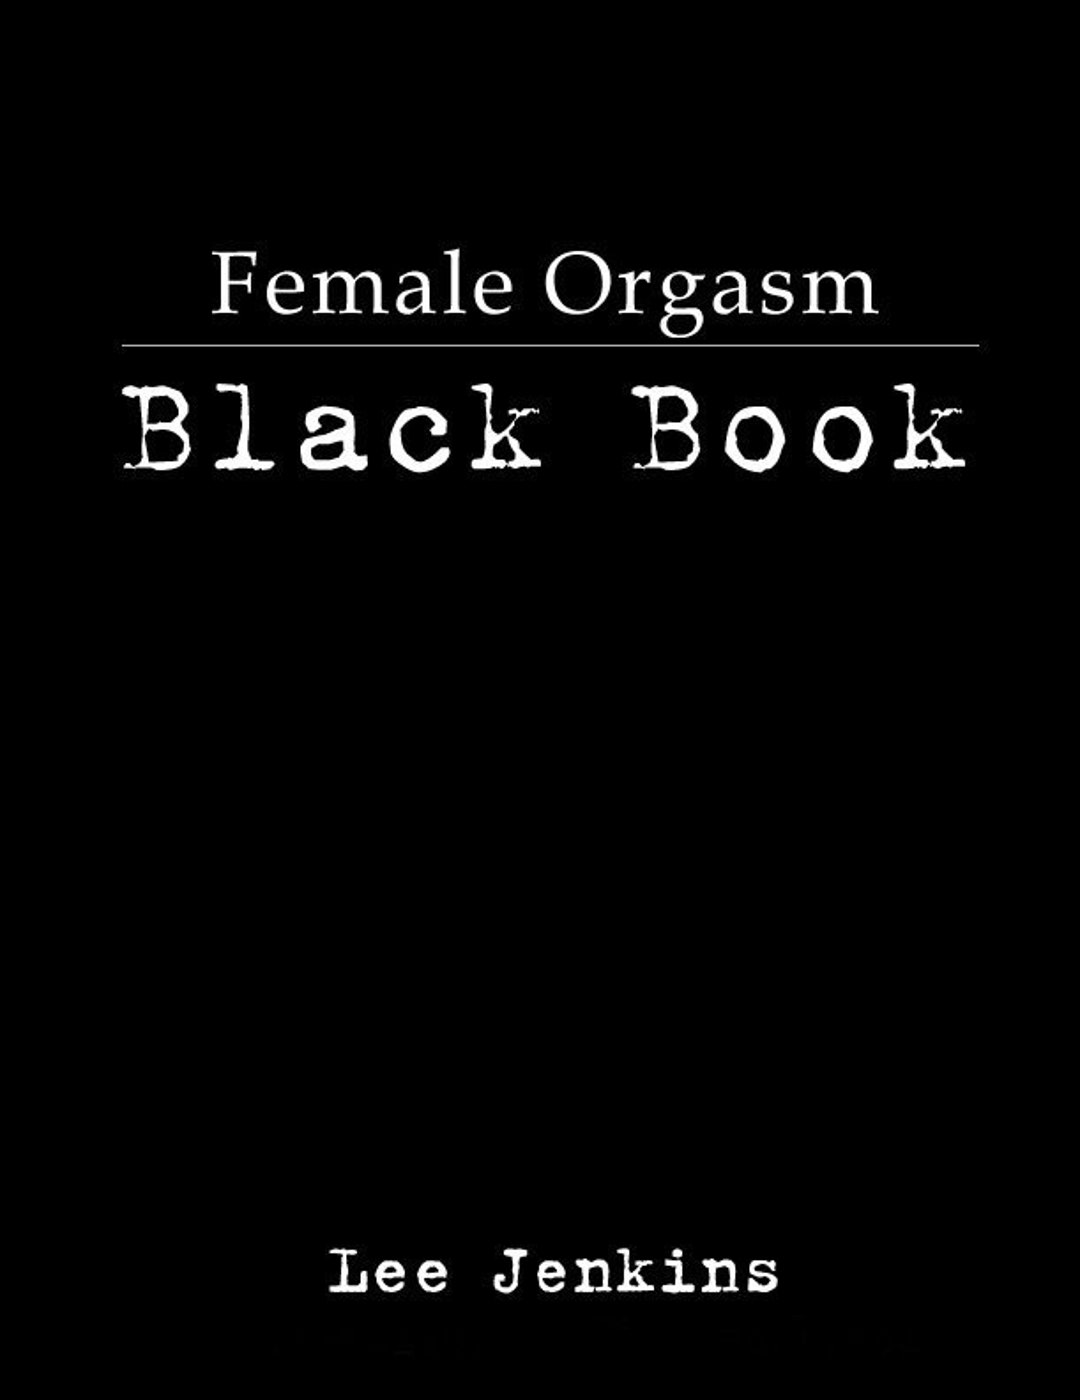 The Female Orgasm Black Ebook PDF Very Informative About